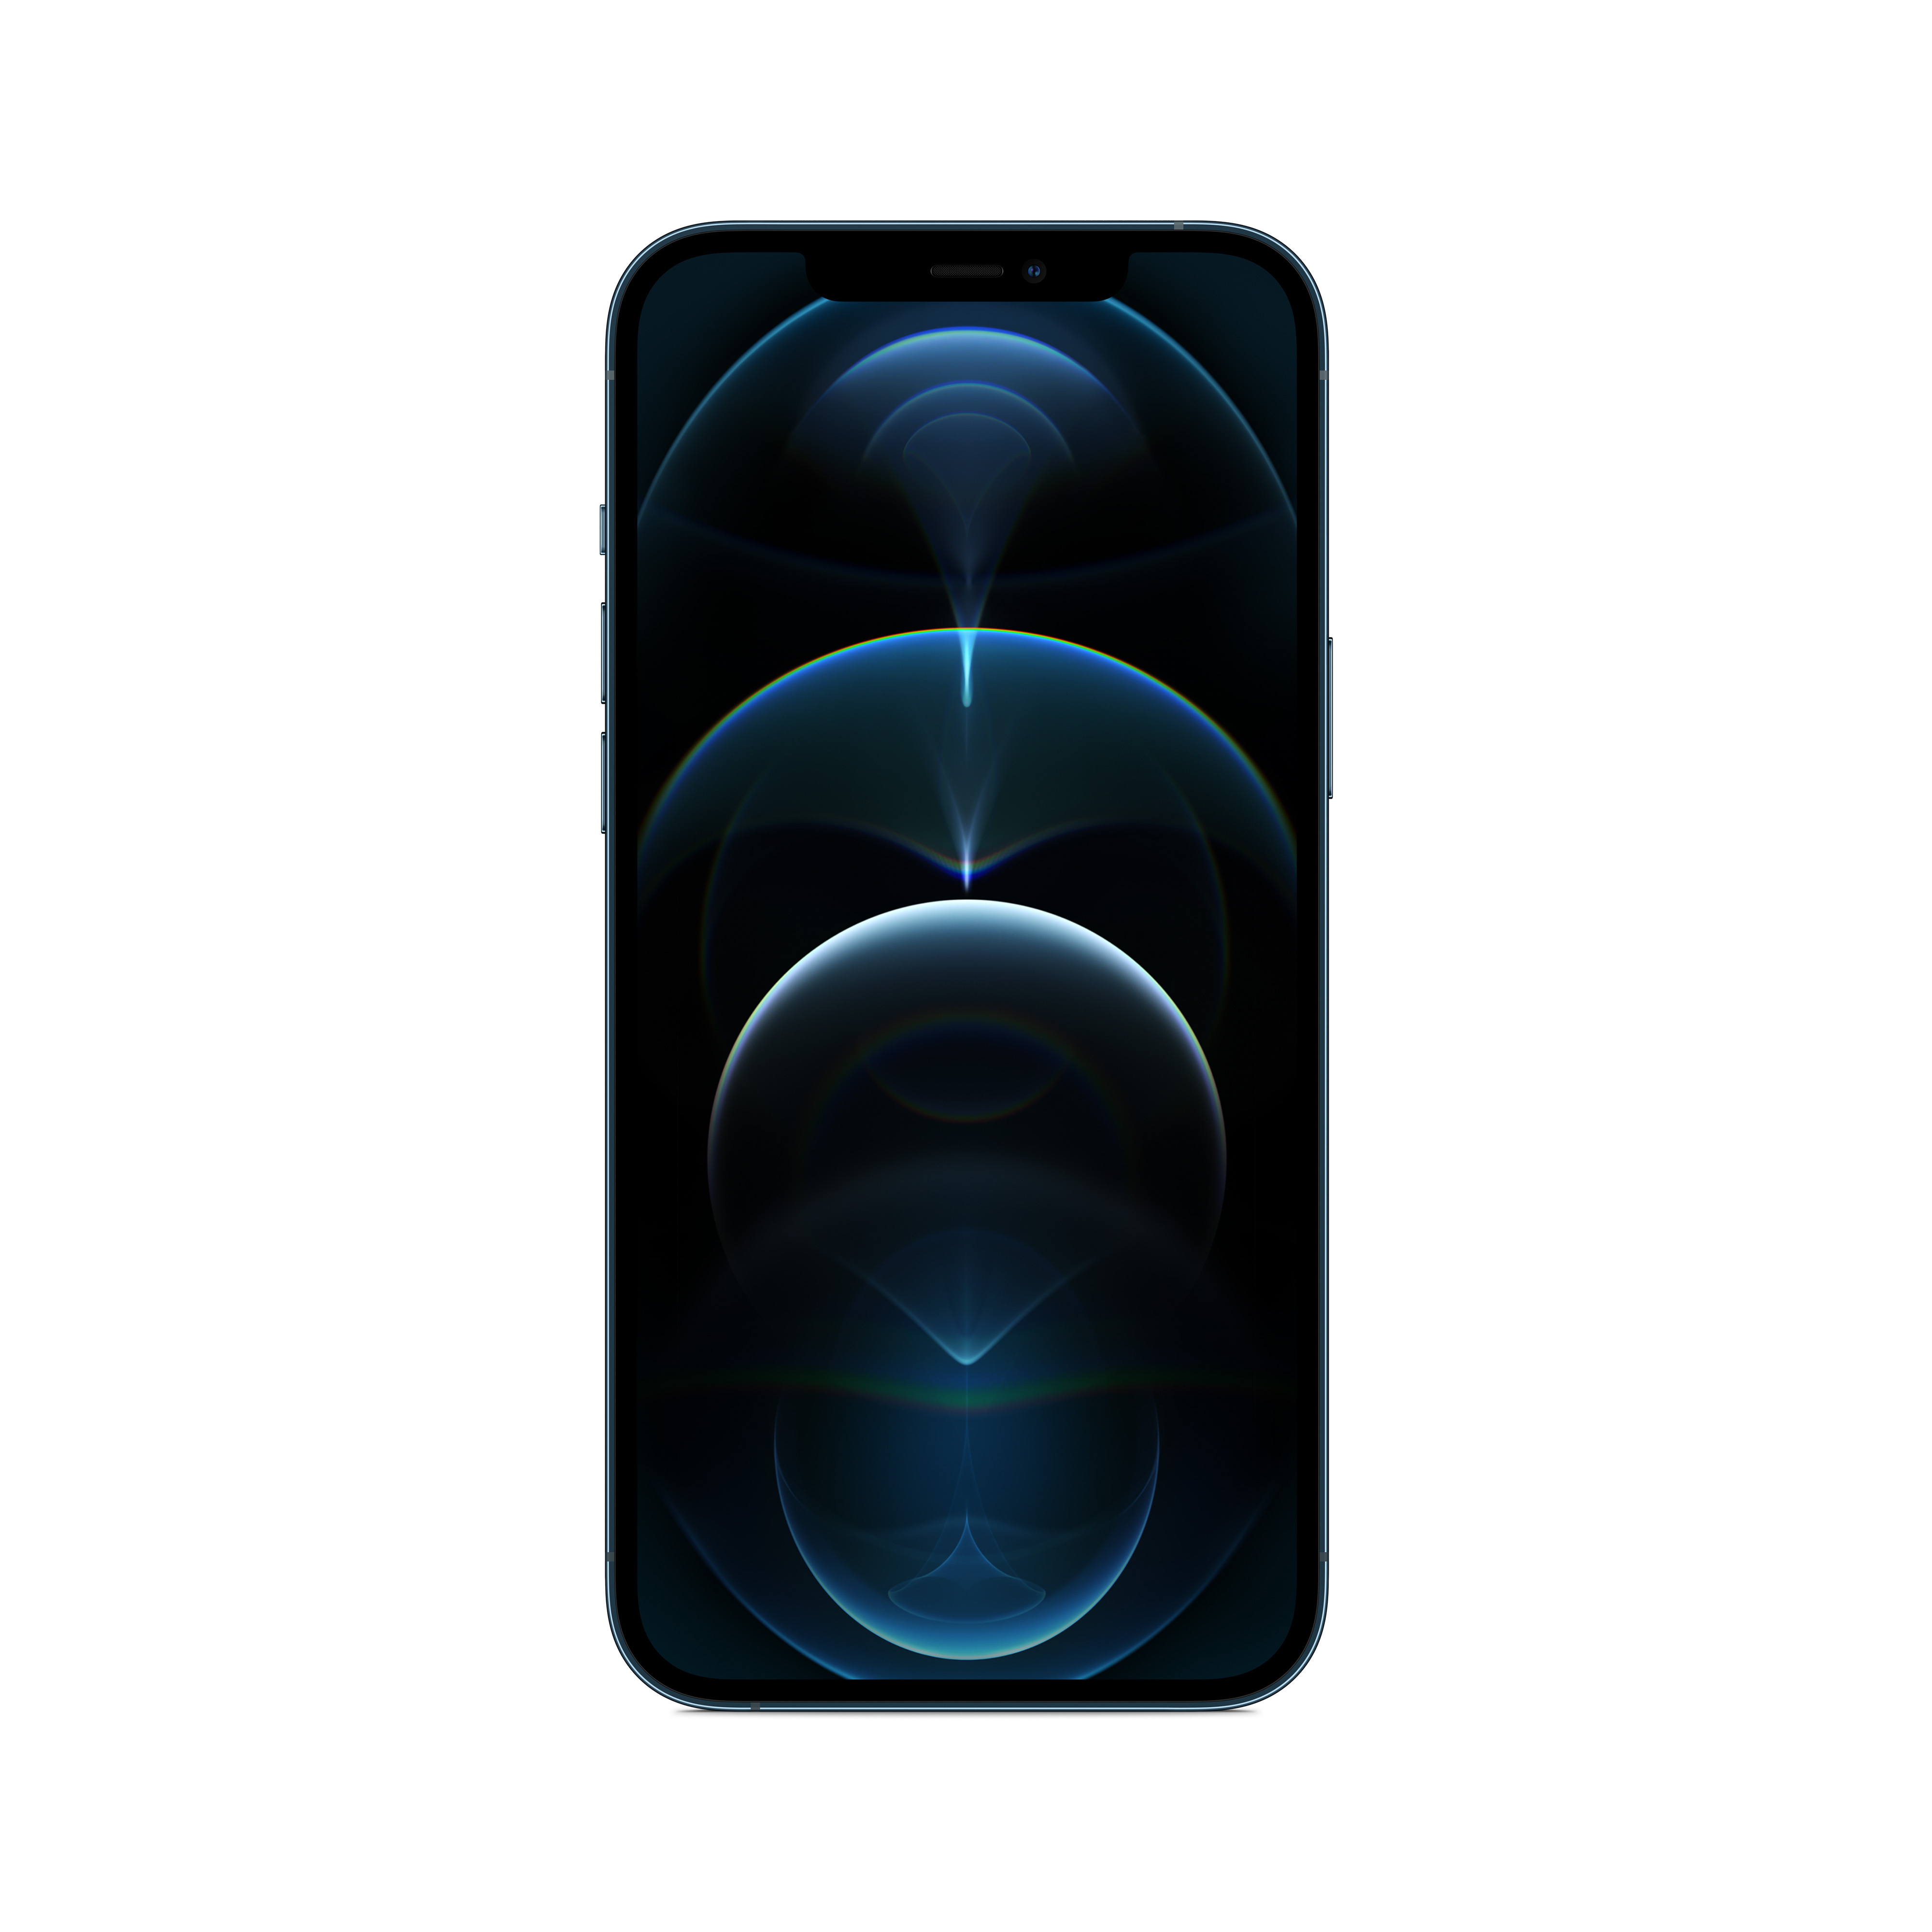 Apple iPhone 12 Pro Max 128 GB / pacific blue / (dualsim) / 5G